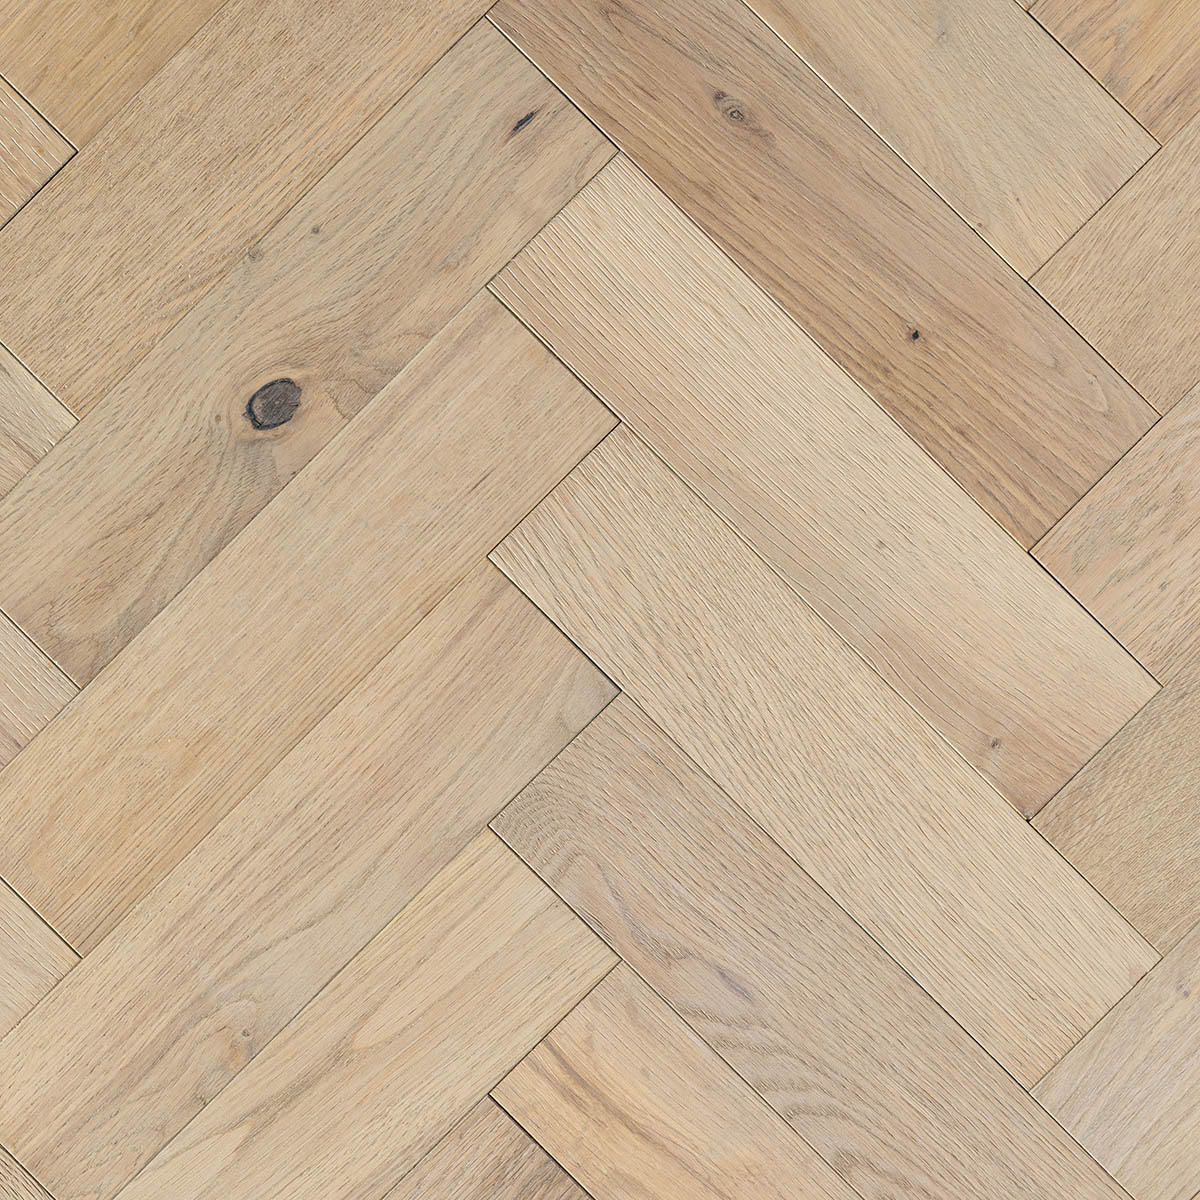 Bell Lane - Rustic-Grade Oak Herringbone Floor 280mm x 70mm